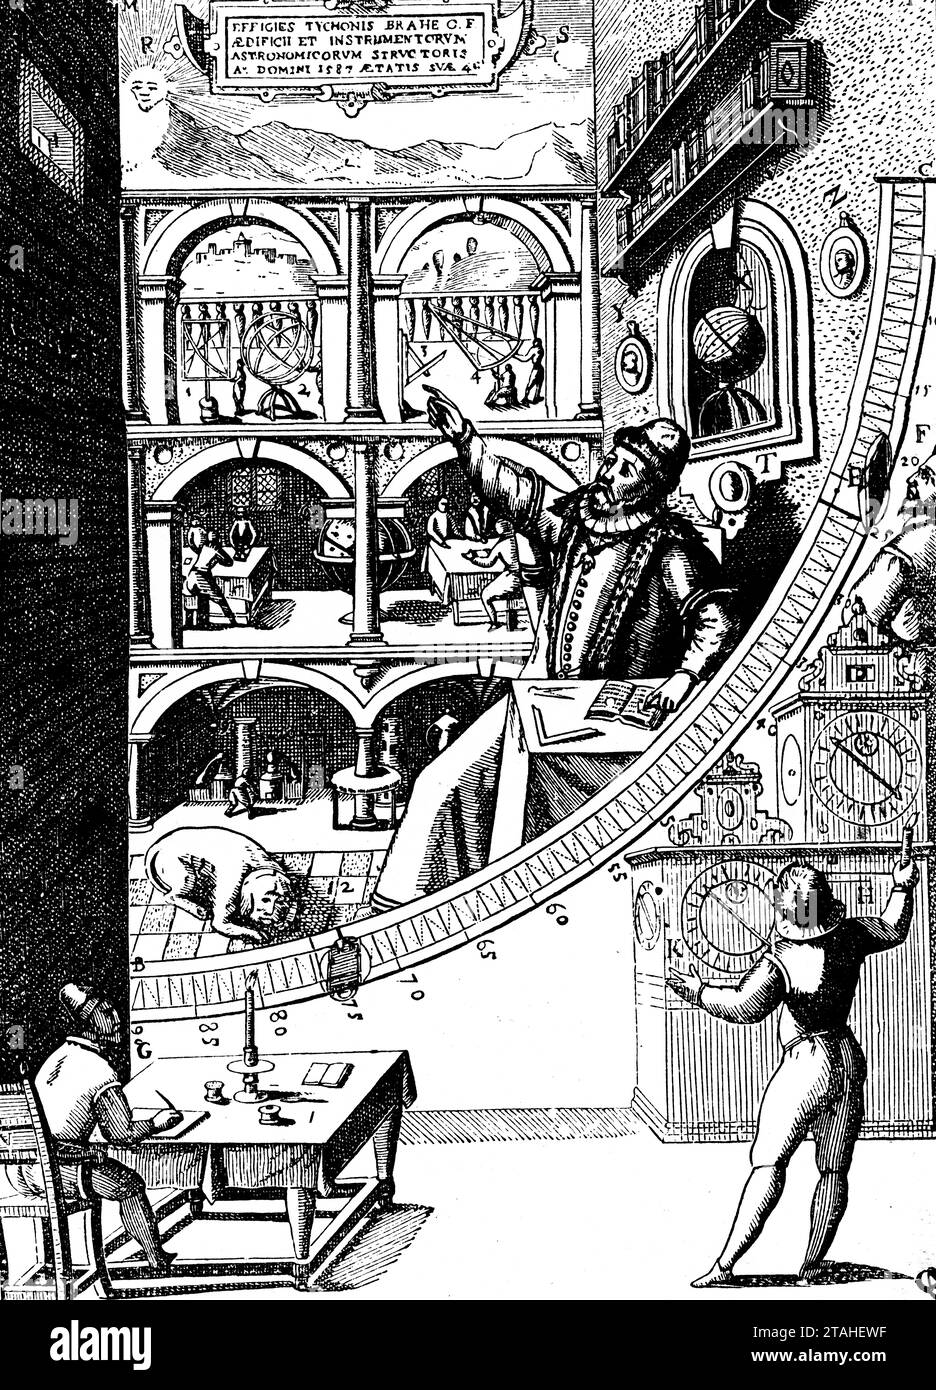 Tycho Brahe's mural quadrant ('Quadrans muralis sive Tichonicus'), 1598. Tycho Brahe's mural quadrant in his Uraniborg observatory on the island of Hven. Illustration from 'Astronomia Instauratae Mechanica', by Tycho Brahe (1546-1601), 1598. Stock Photo